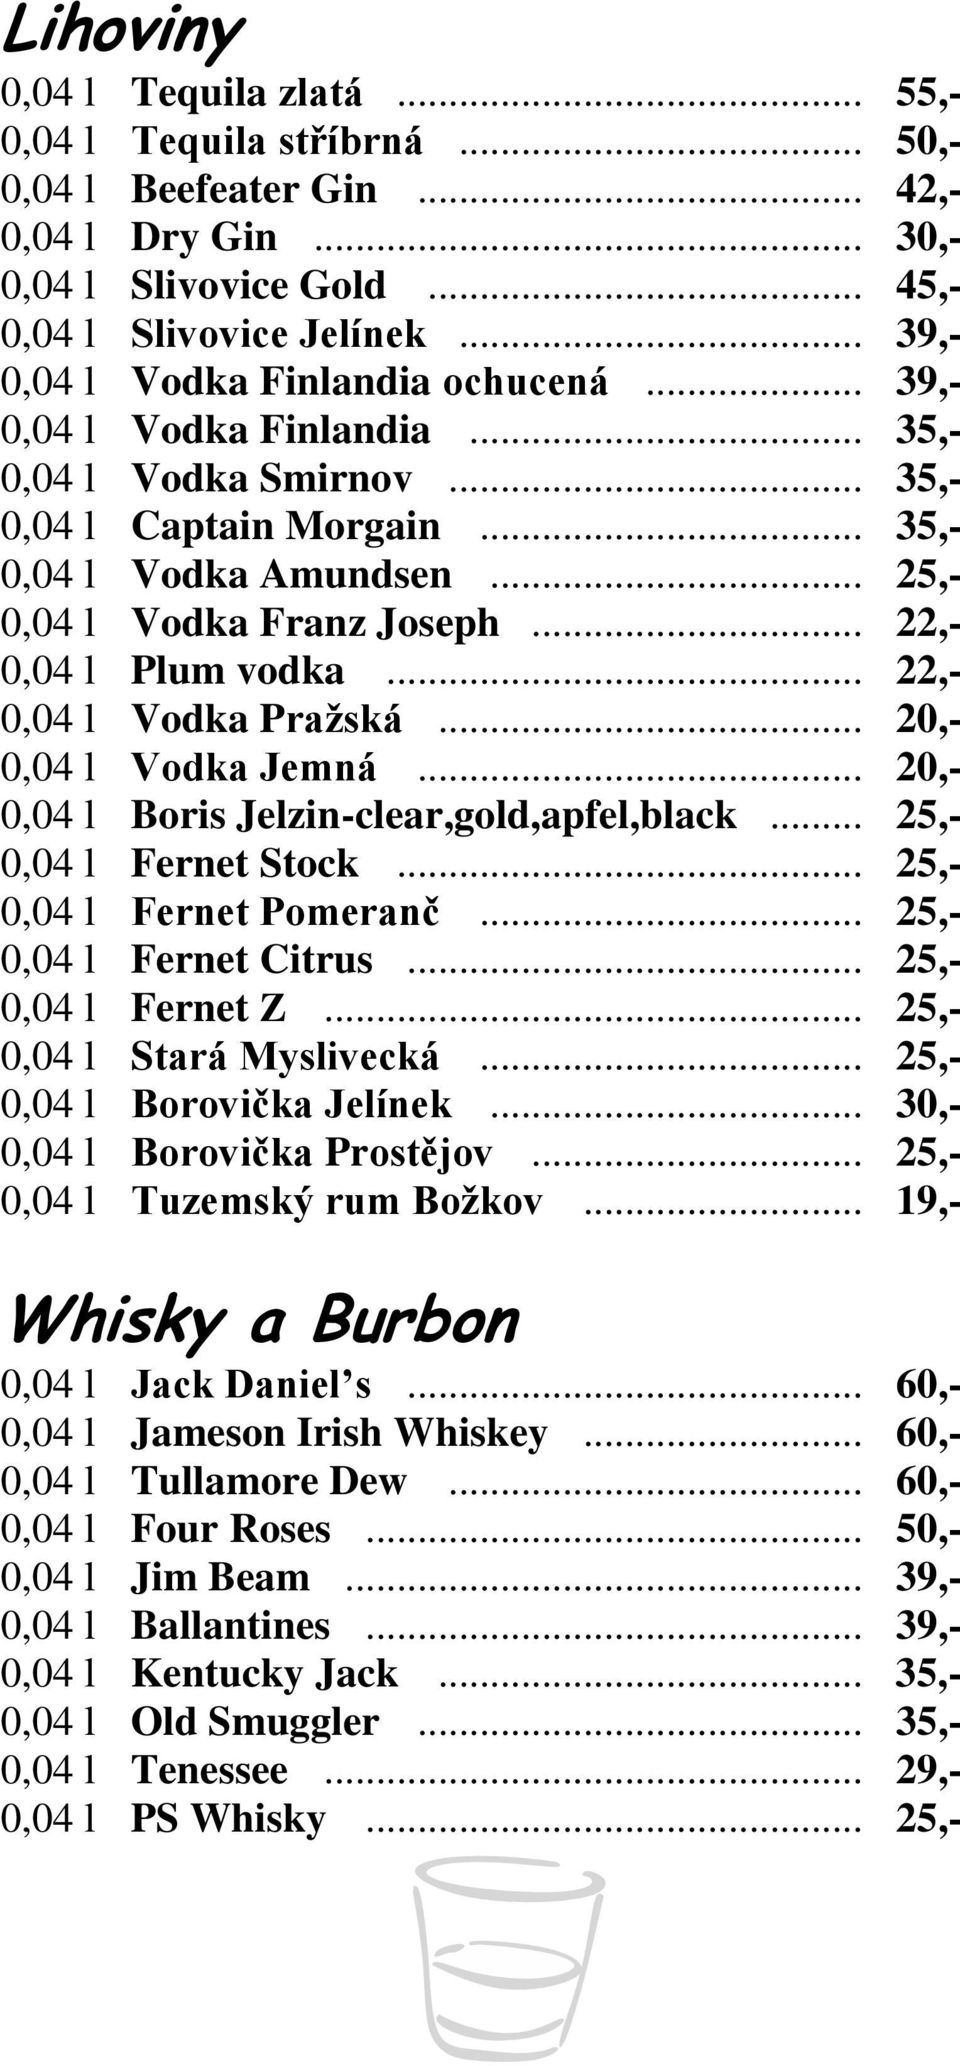 .. 22,- 0,04 l Plum vodka... 22,- 0,04 l Vodka Pražská... 20,- 0,04 l Vodka Jemná... 20,- 0,04 l Boris Jelzin-clear,gold,apfel,black... 25,- 0,04 l Fernet Stock... 25,- 0,04 l Fernet Pomeranč.